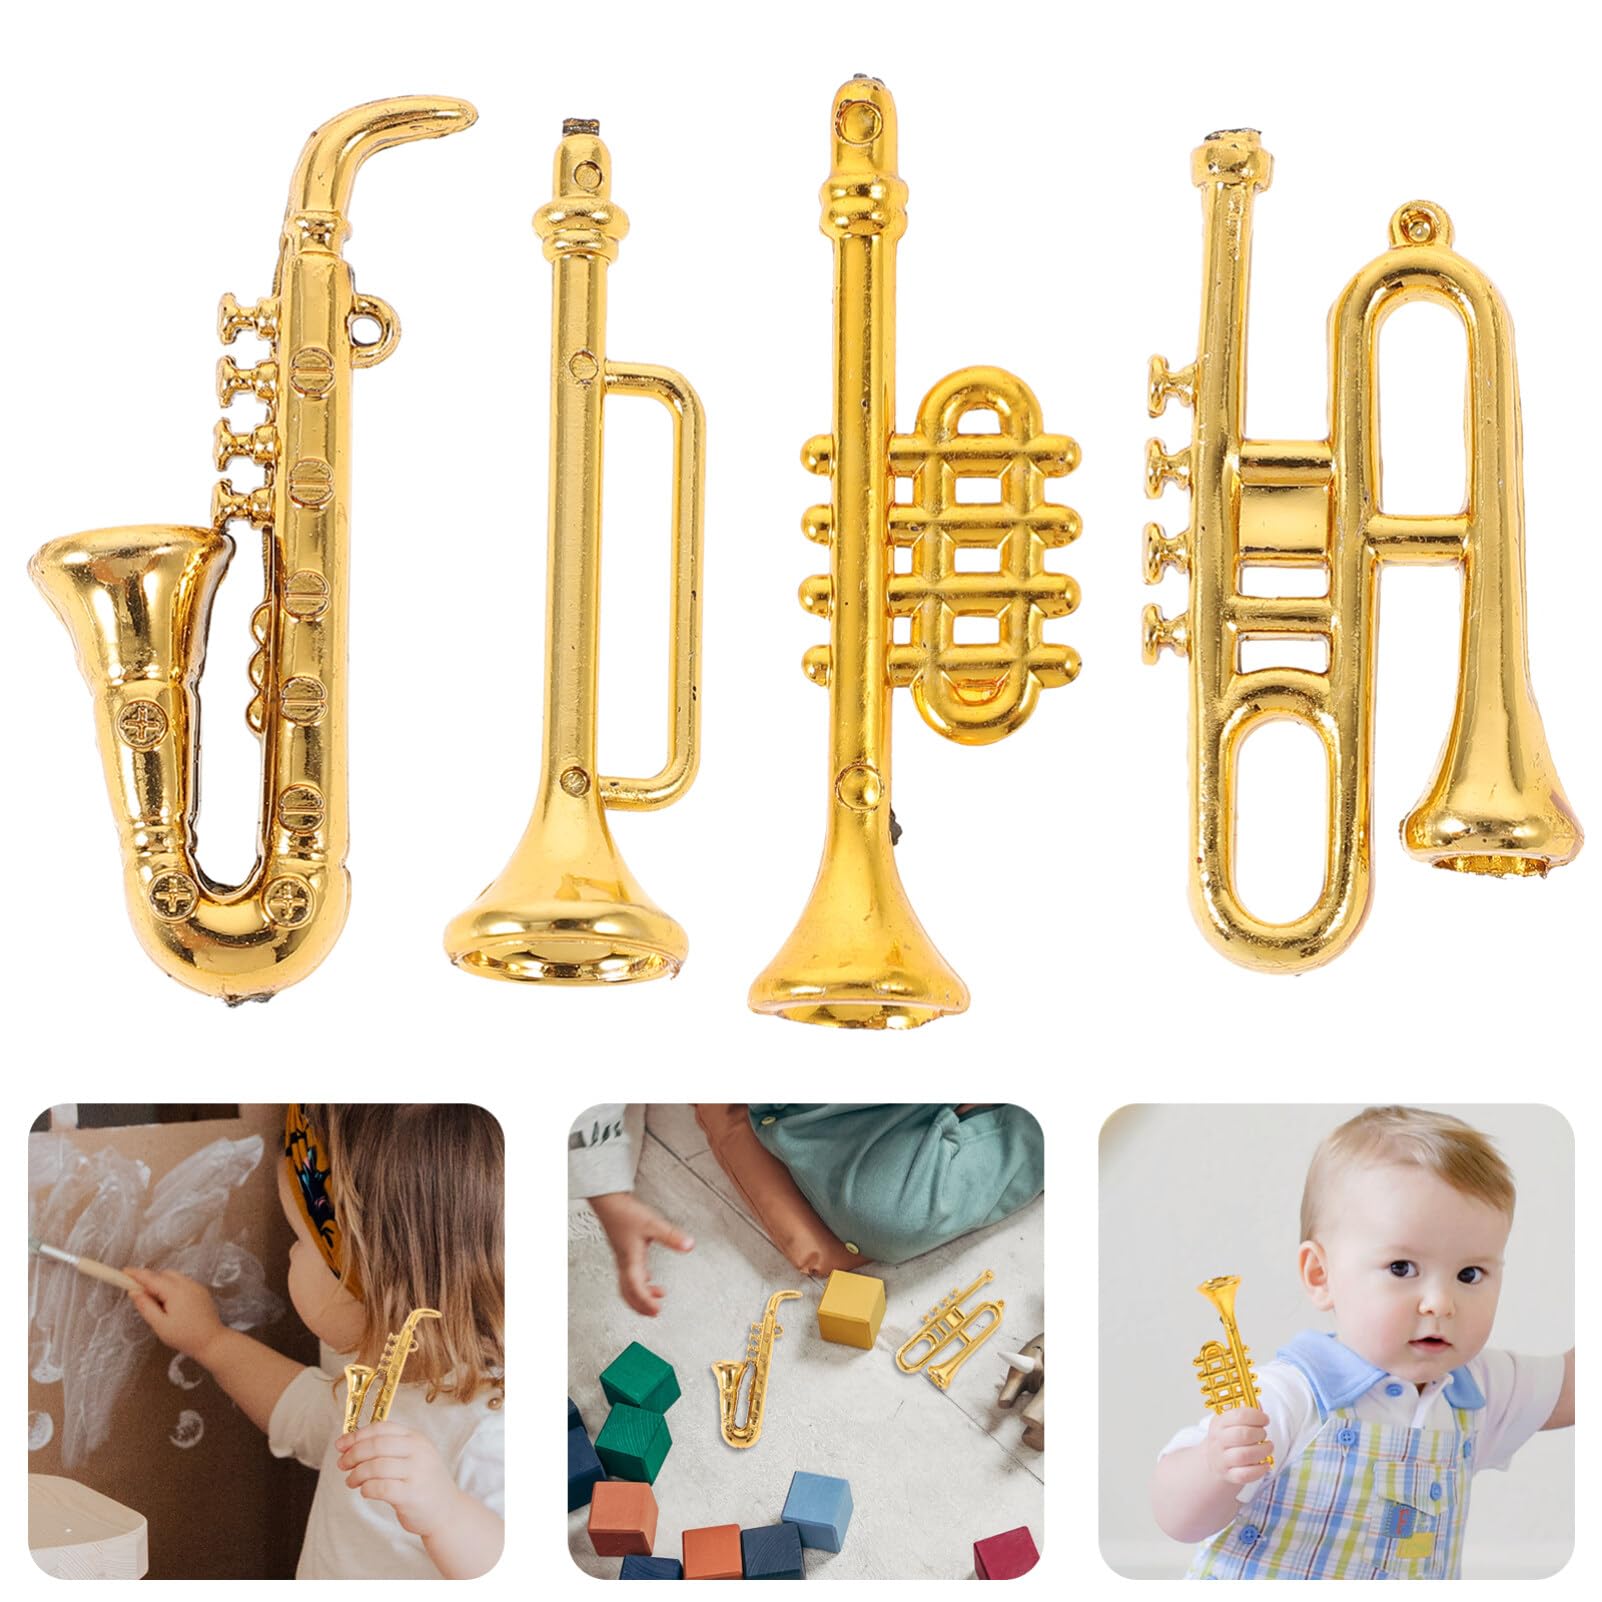 BESTOYARD Dollhouse Miniature Musical Instrument Set, 4pcs Mini House Musical Instrument Model Includes Trumpet Saxophone Model Accessory for Dollhouse Mini Music Room